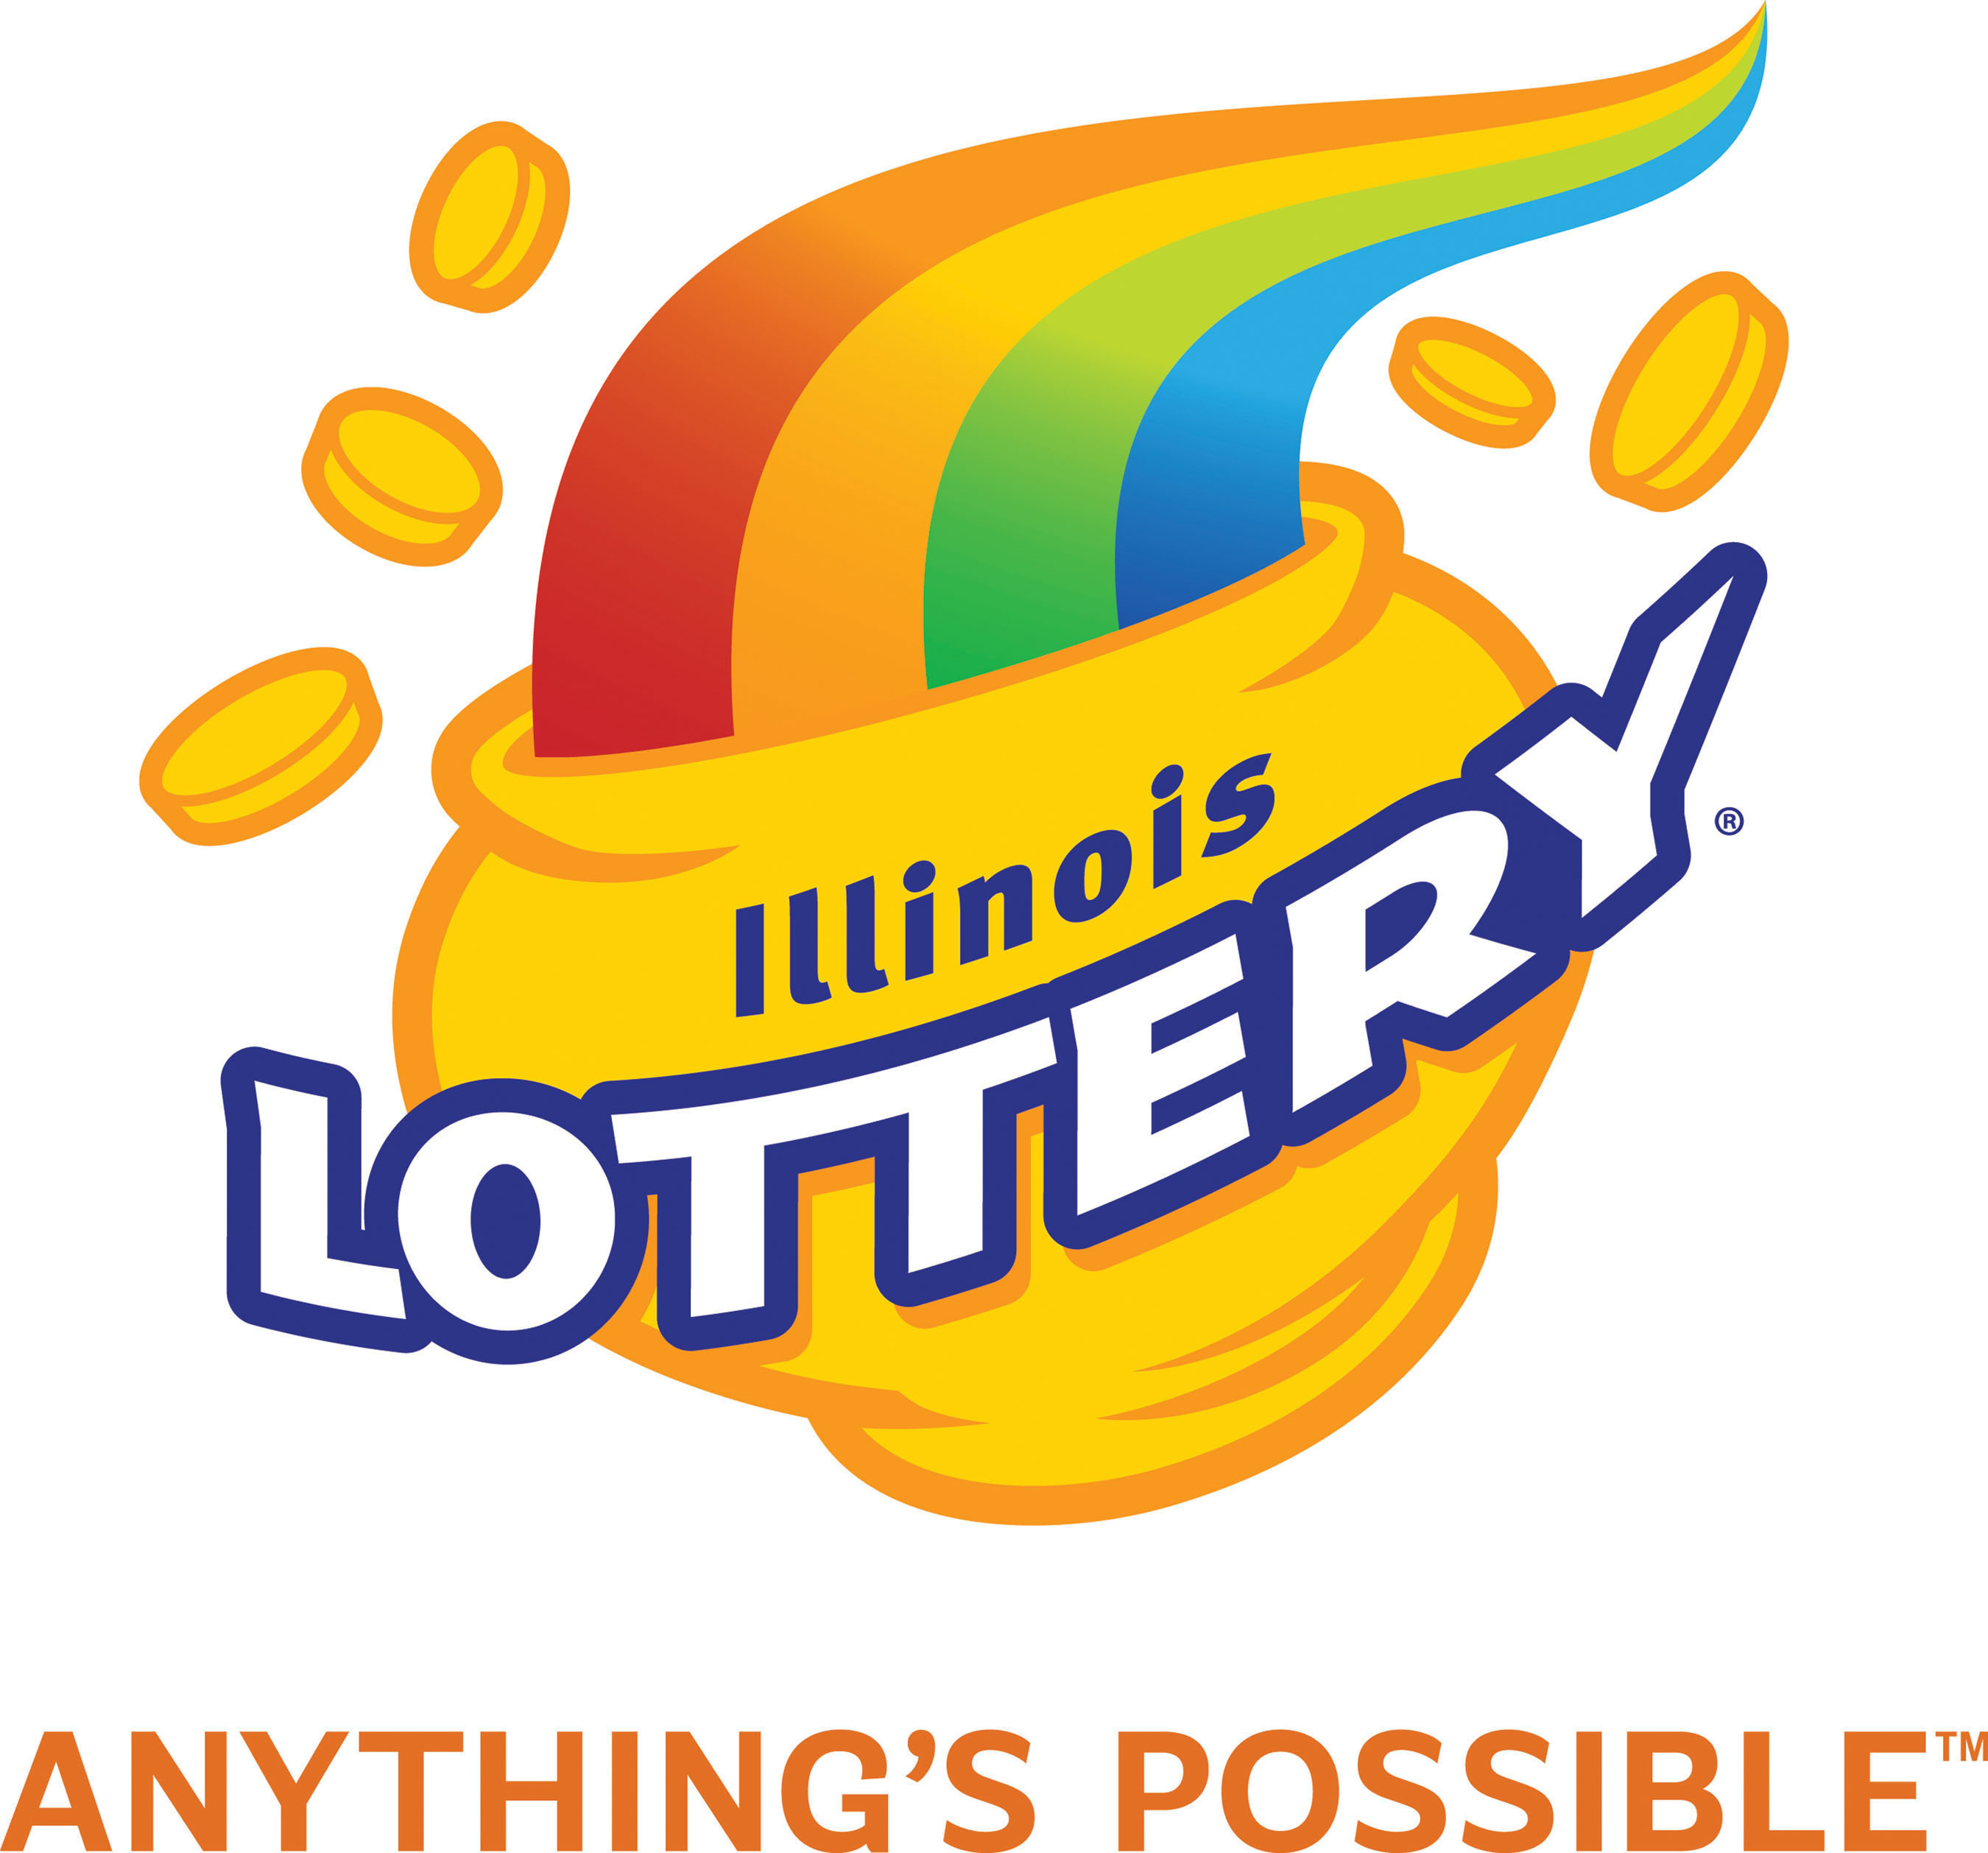 Illinois Lottery Logo. (PRNewsFoto/Illinois Lottery) (PRNewsFoto/)